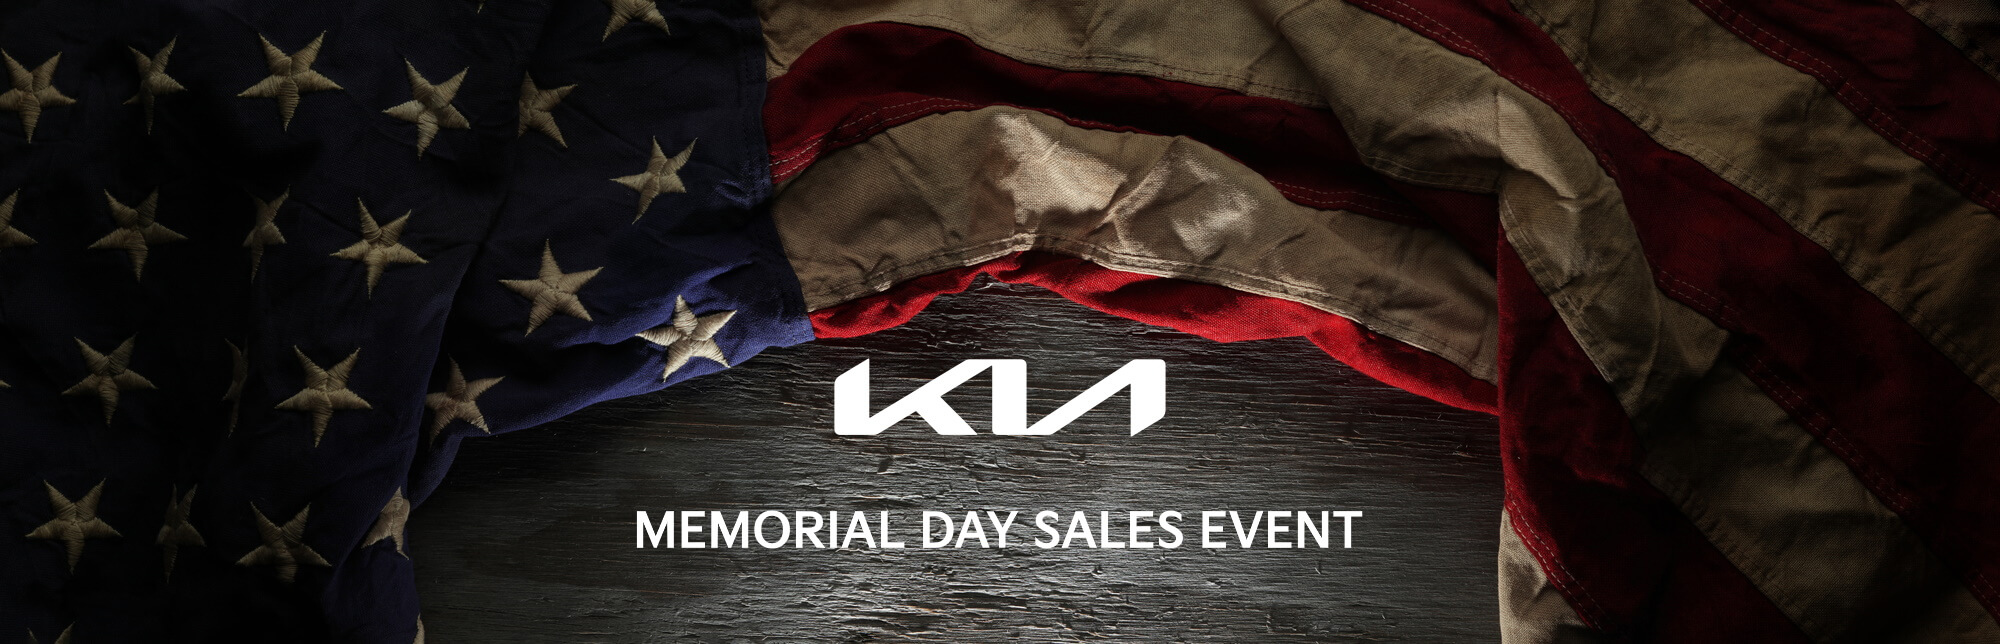 Kia Memorial Day Car Deal Sales Event at Summit Place Kia